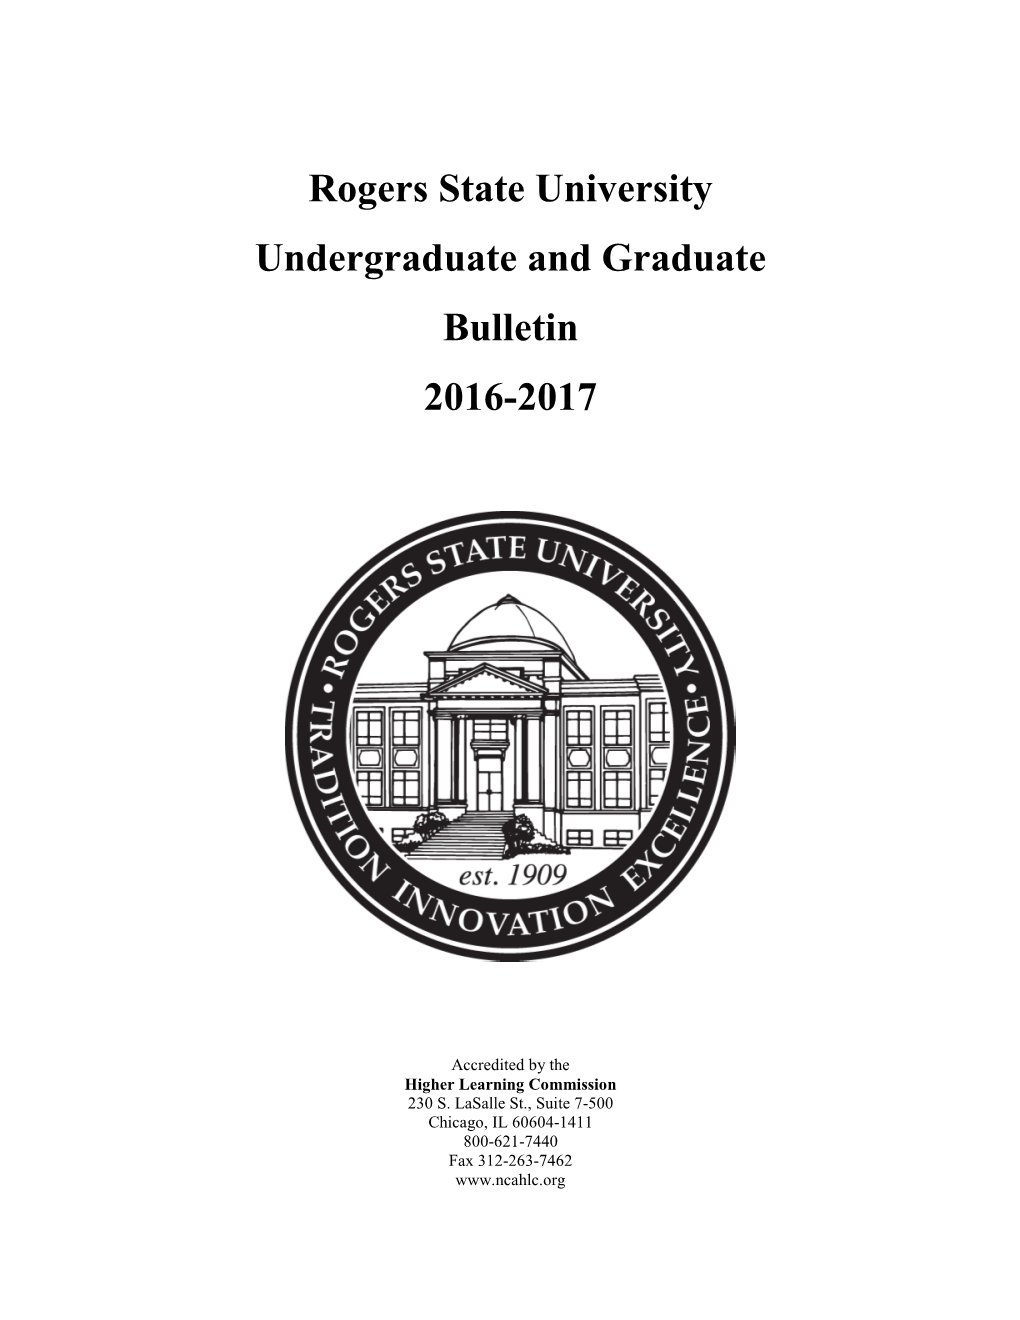 Rogers State University Undergraduate and Graduate Bulletin 2016-2017